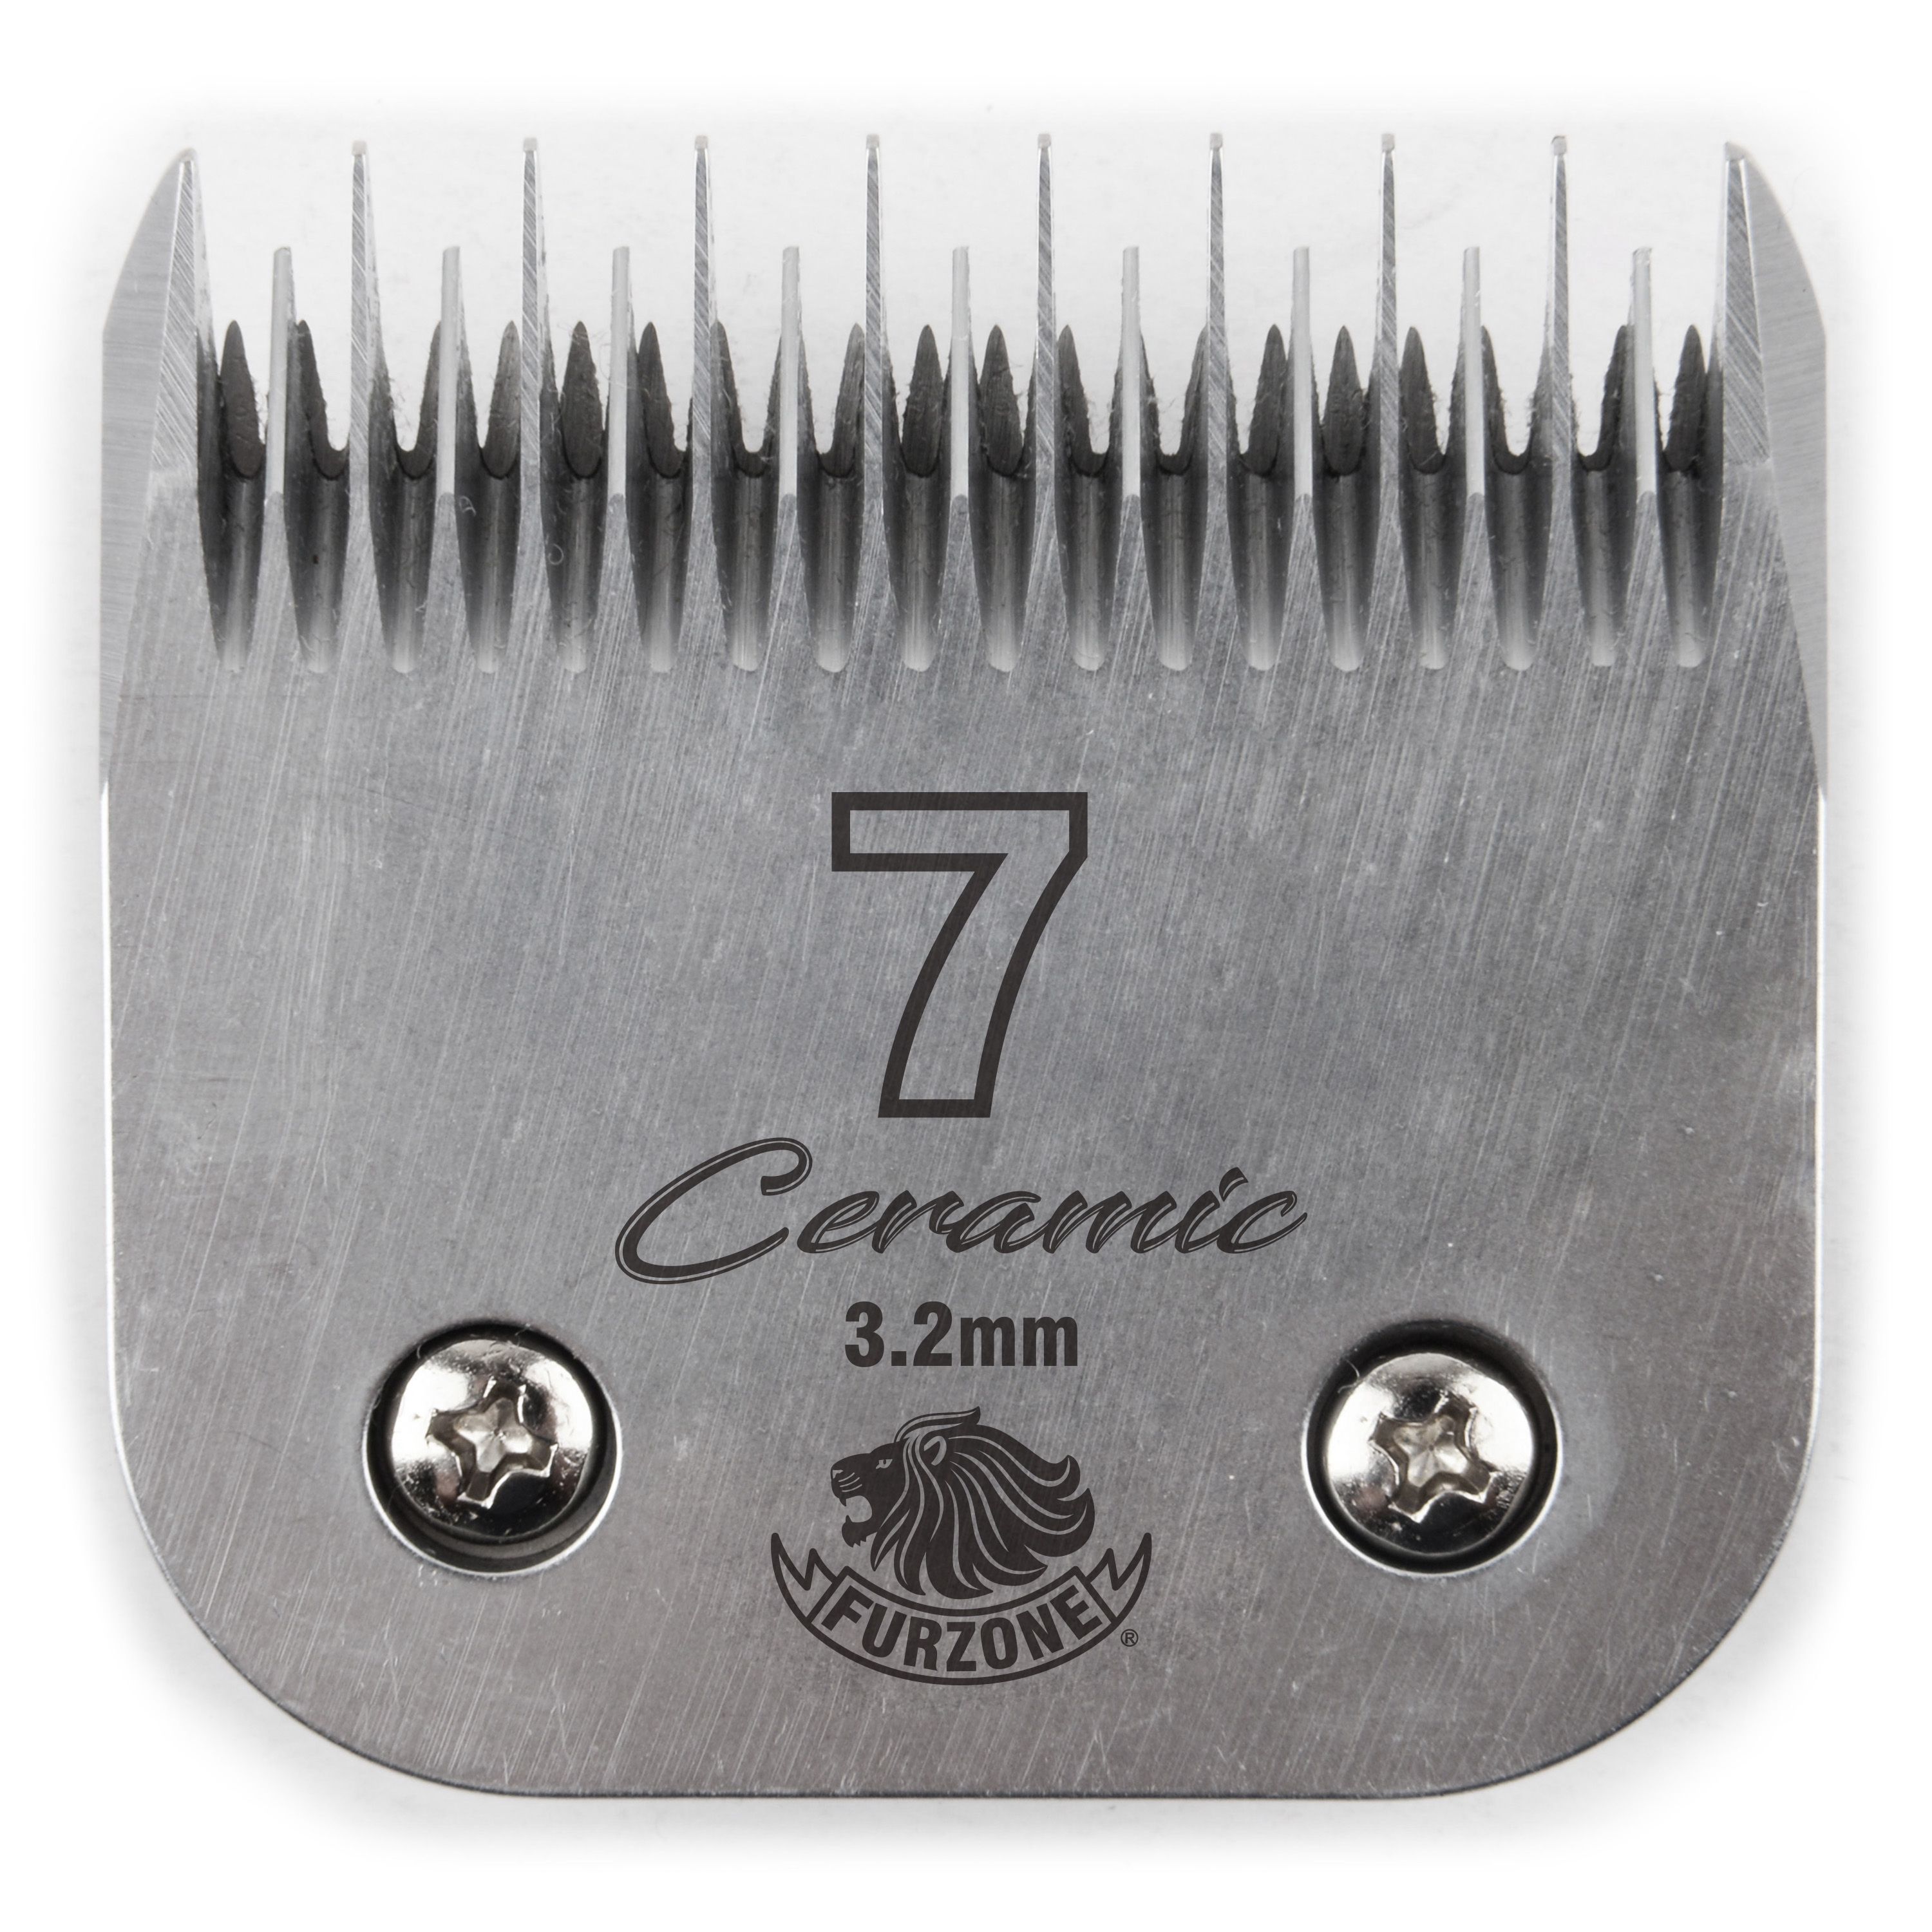 Furzone #7-3.2mm-Skip Teeth Professional A5 Detachable Blade - Made Of High-Tech Ceramic Materials